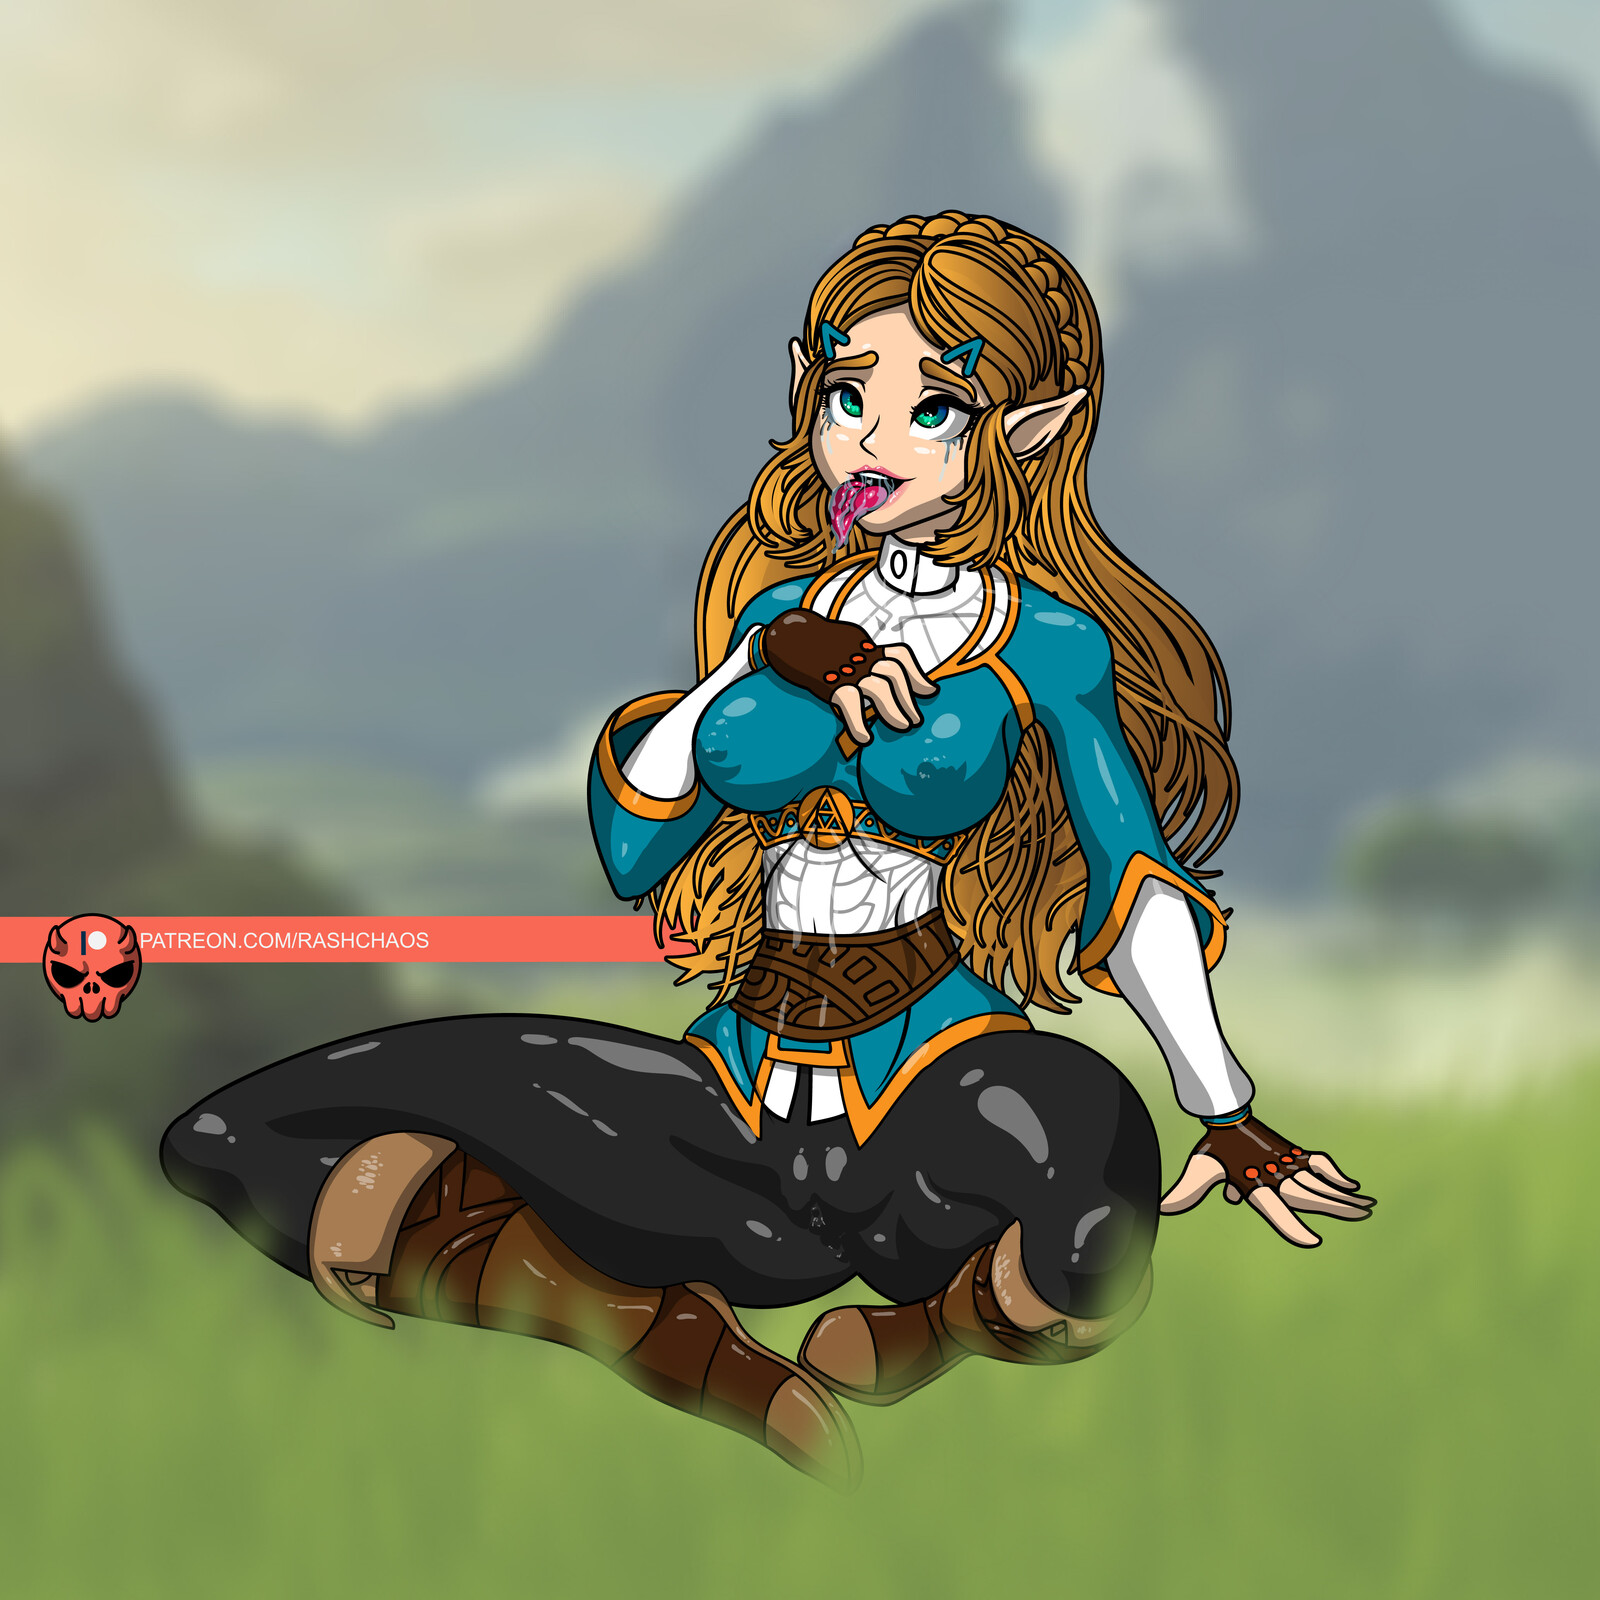 Princess Zelda breath of the wild.